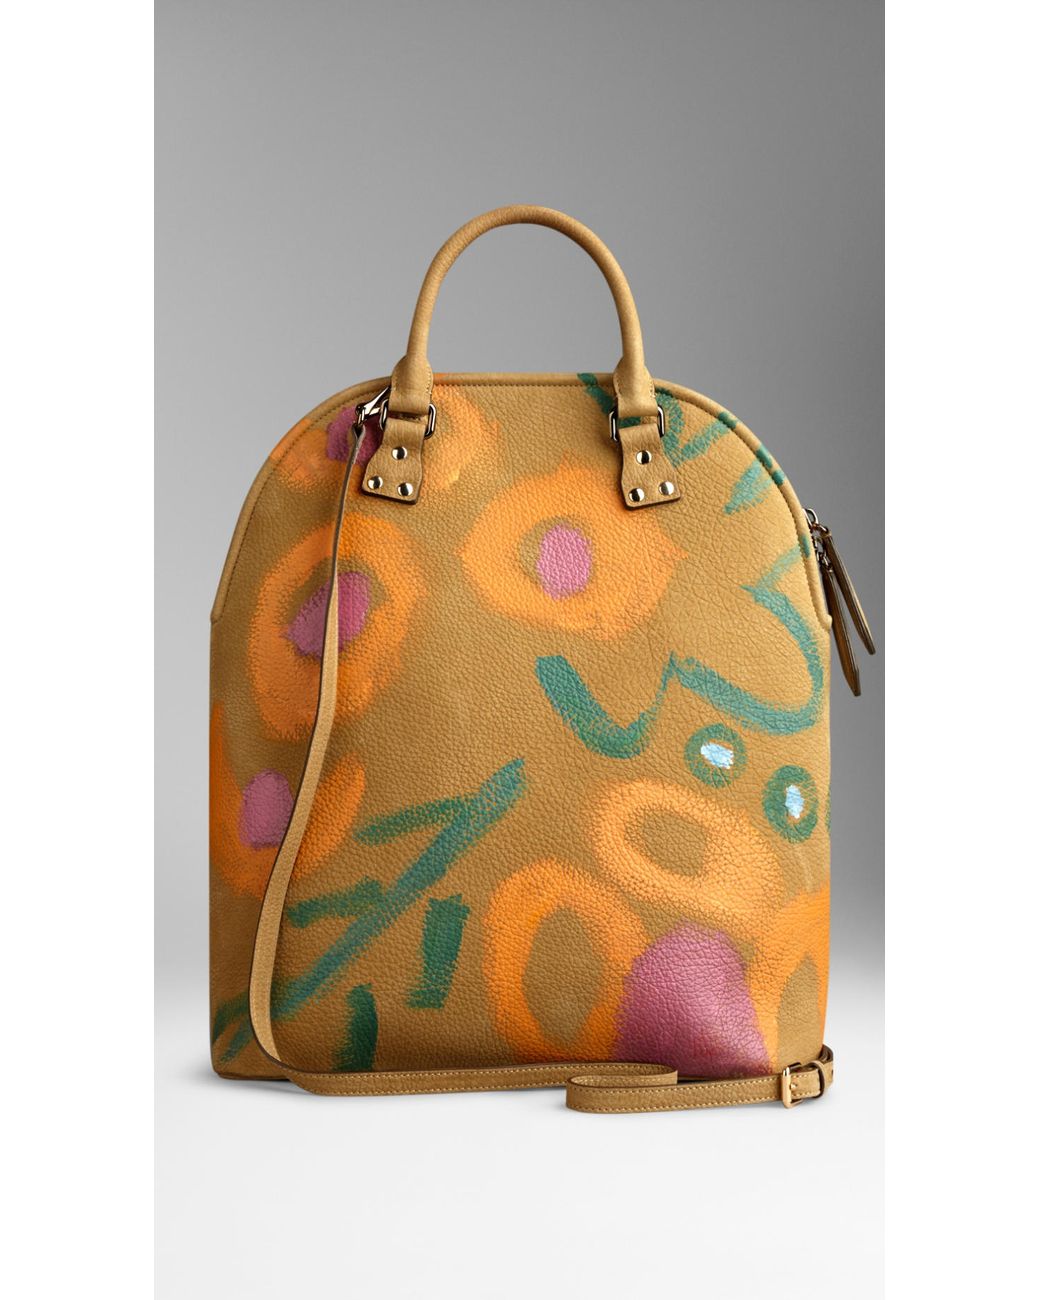 Custom Painted Louis Vuitton Speedy  Women's bags by style, Hand painted  bags handbags, Handpainted bags